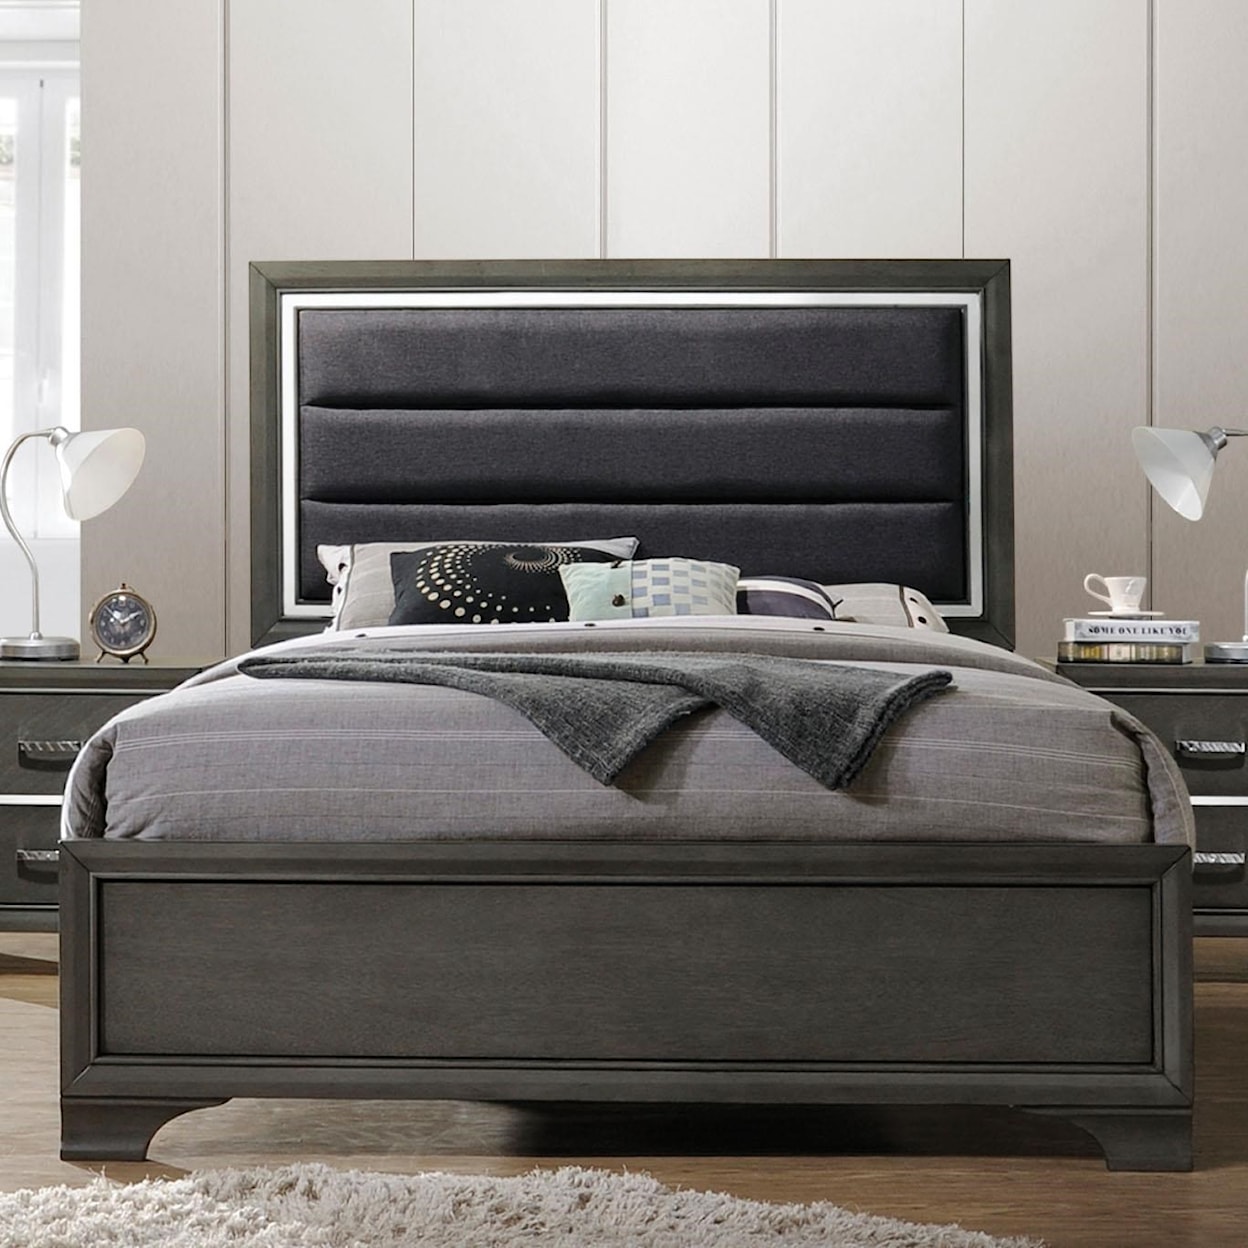 Acme Furniture Carine II Queen Bed